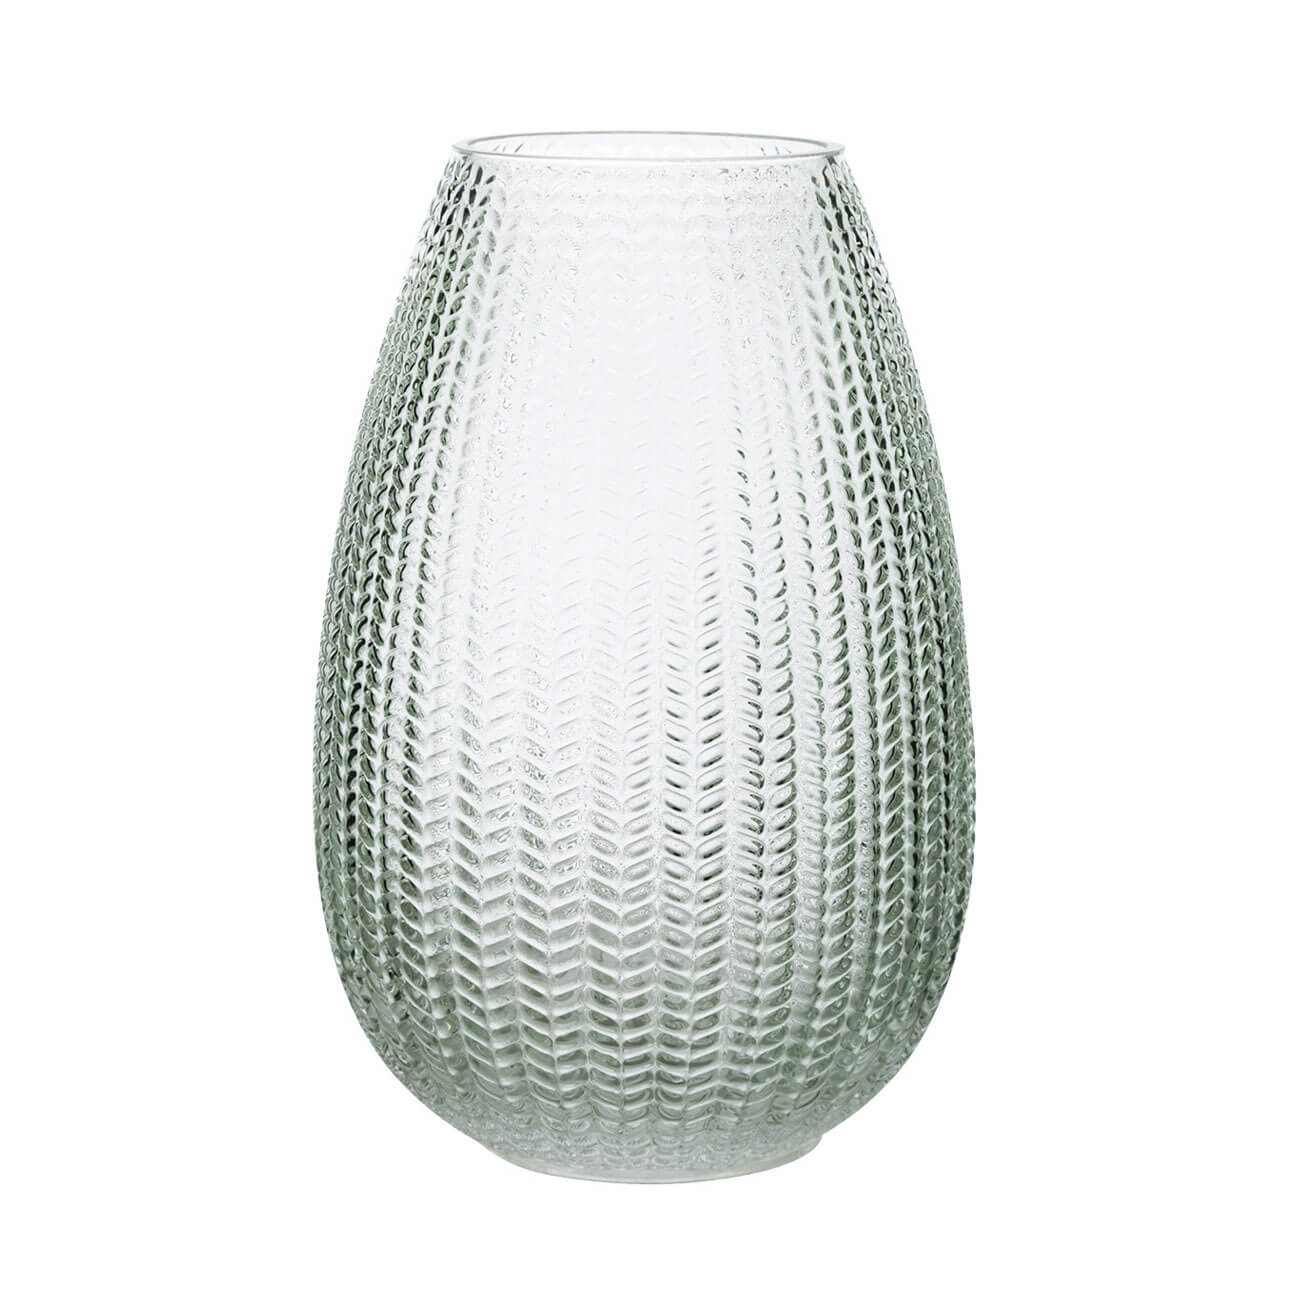 Ваза для цветов, 26 см, стекло, светло-зеленая, Fantasy ваза mary стекло прозрачно зеленая 28 5 см